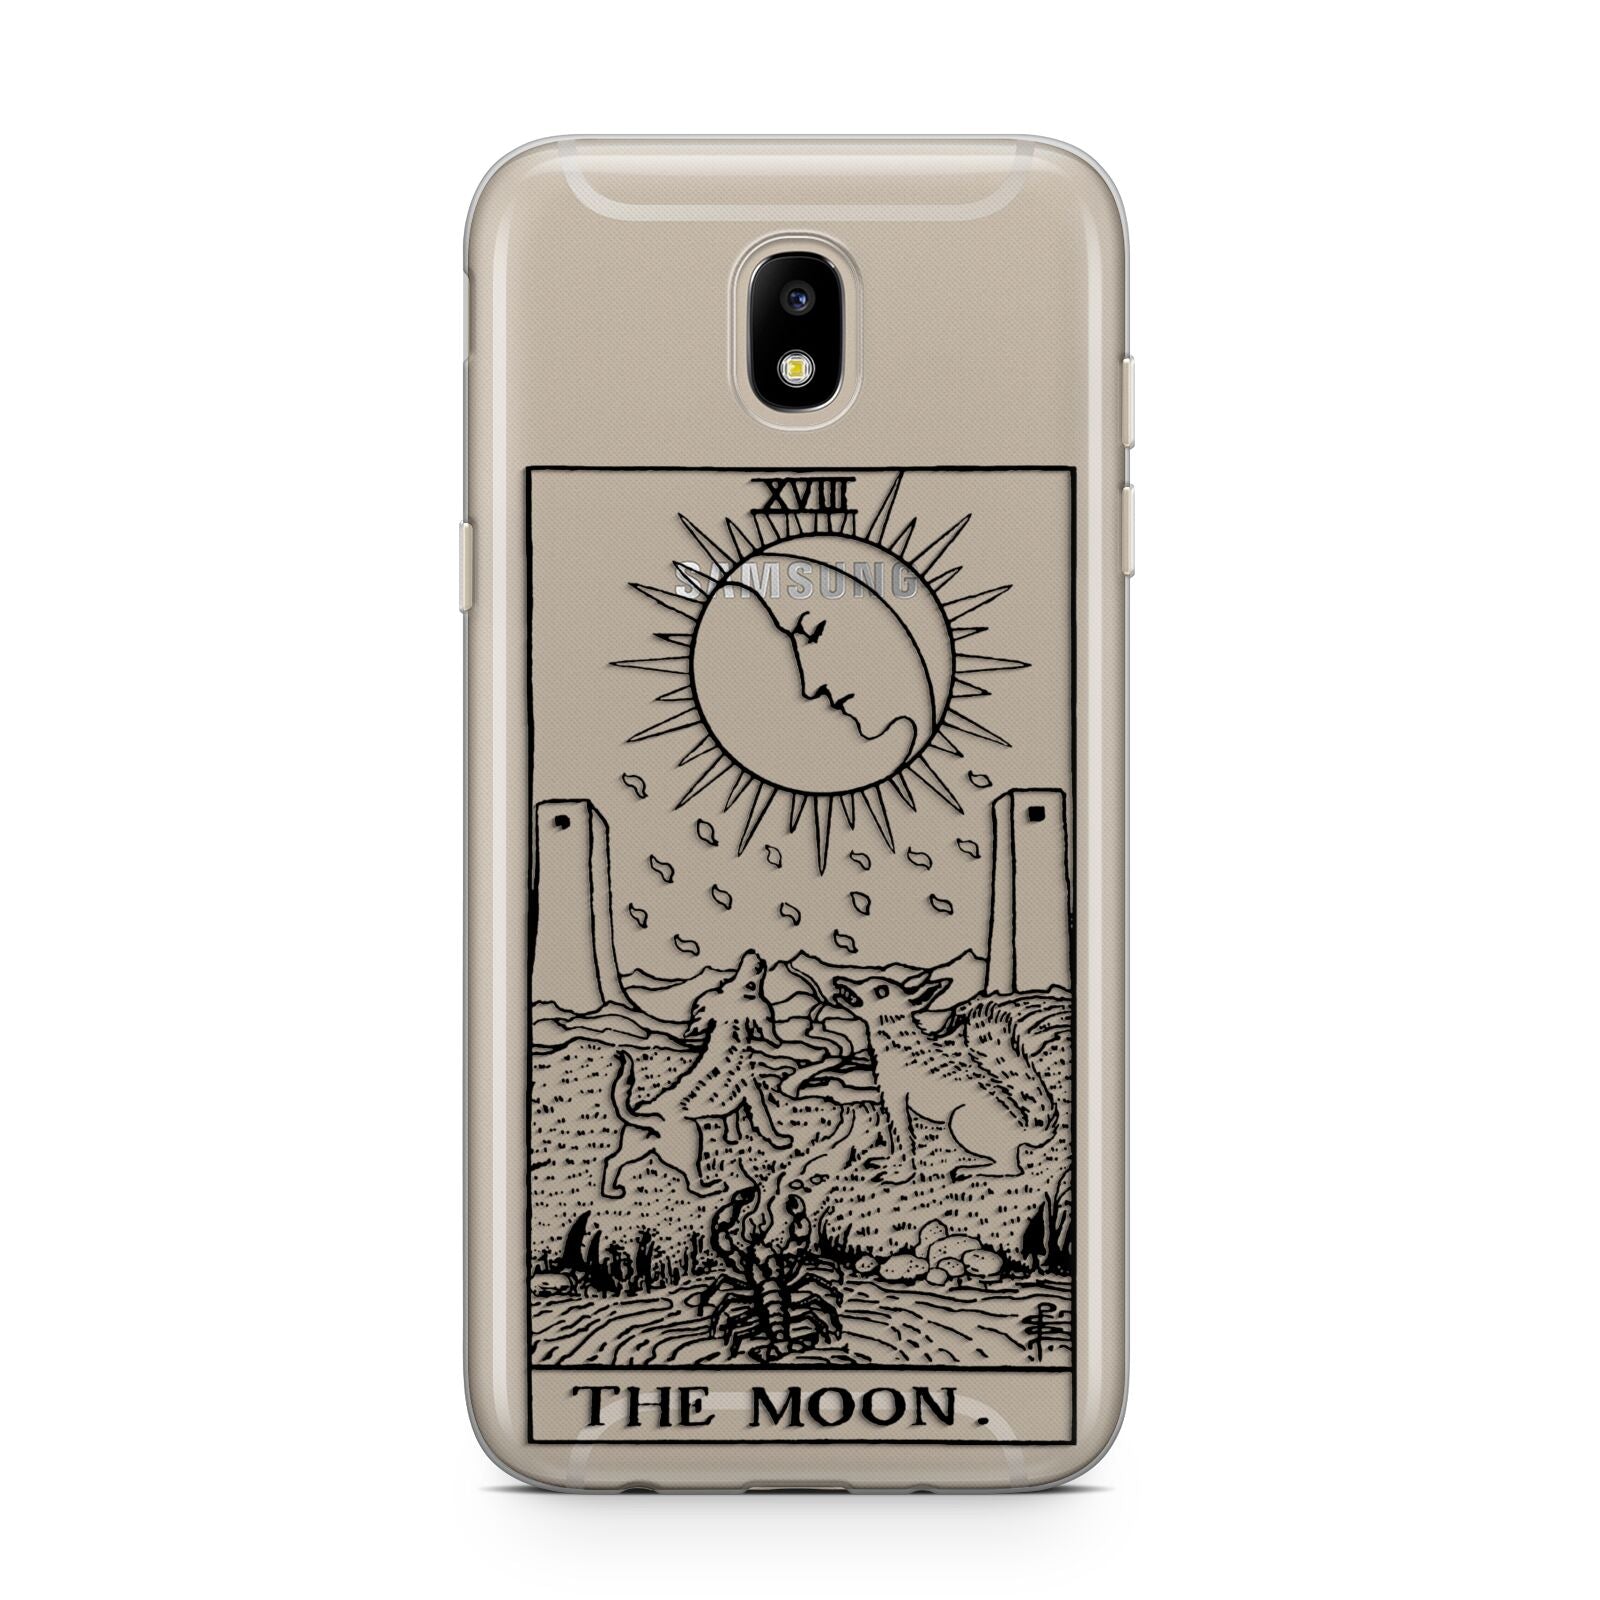 The Moon Monochrome Samsung J5 2017 Case